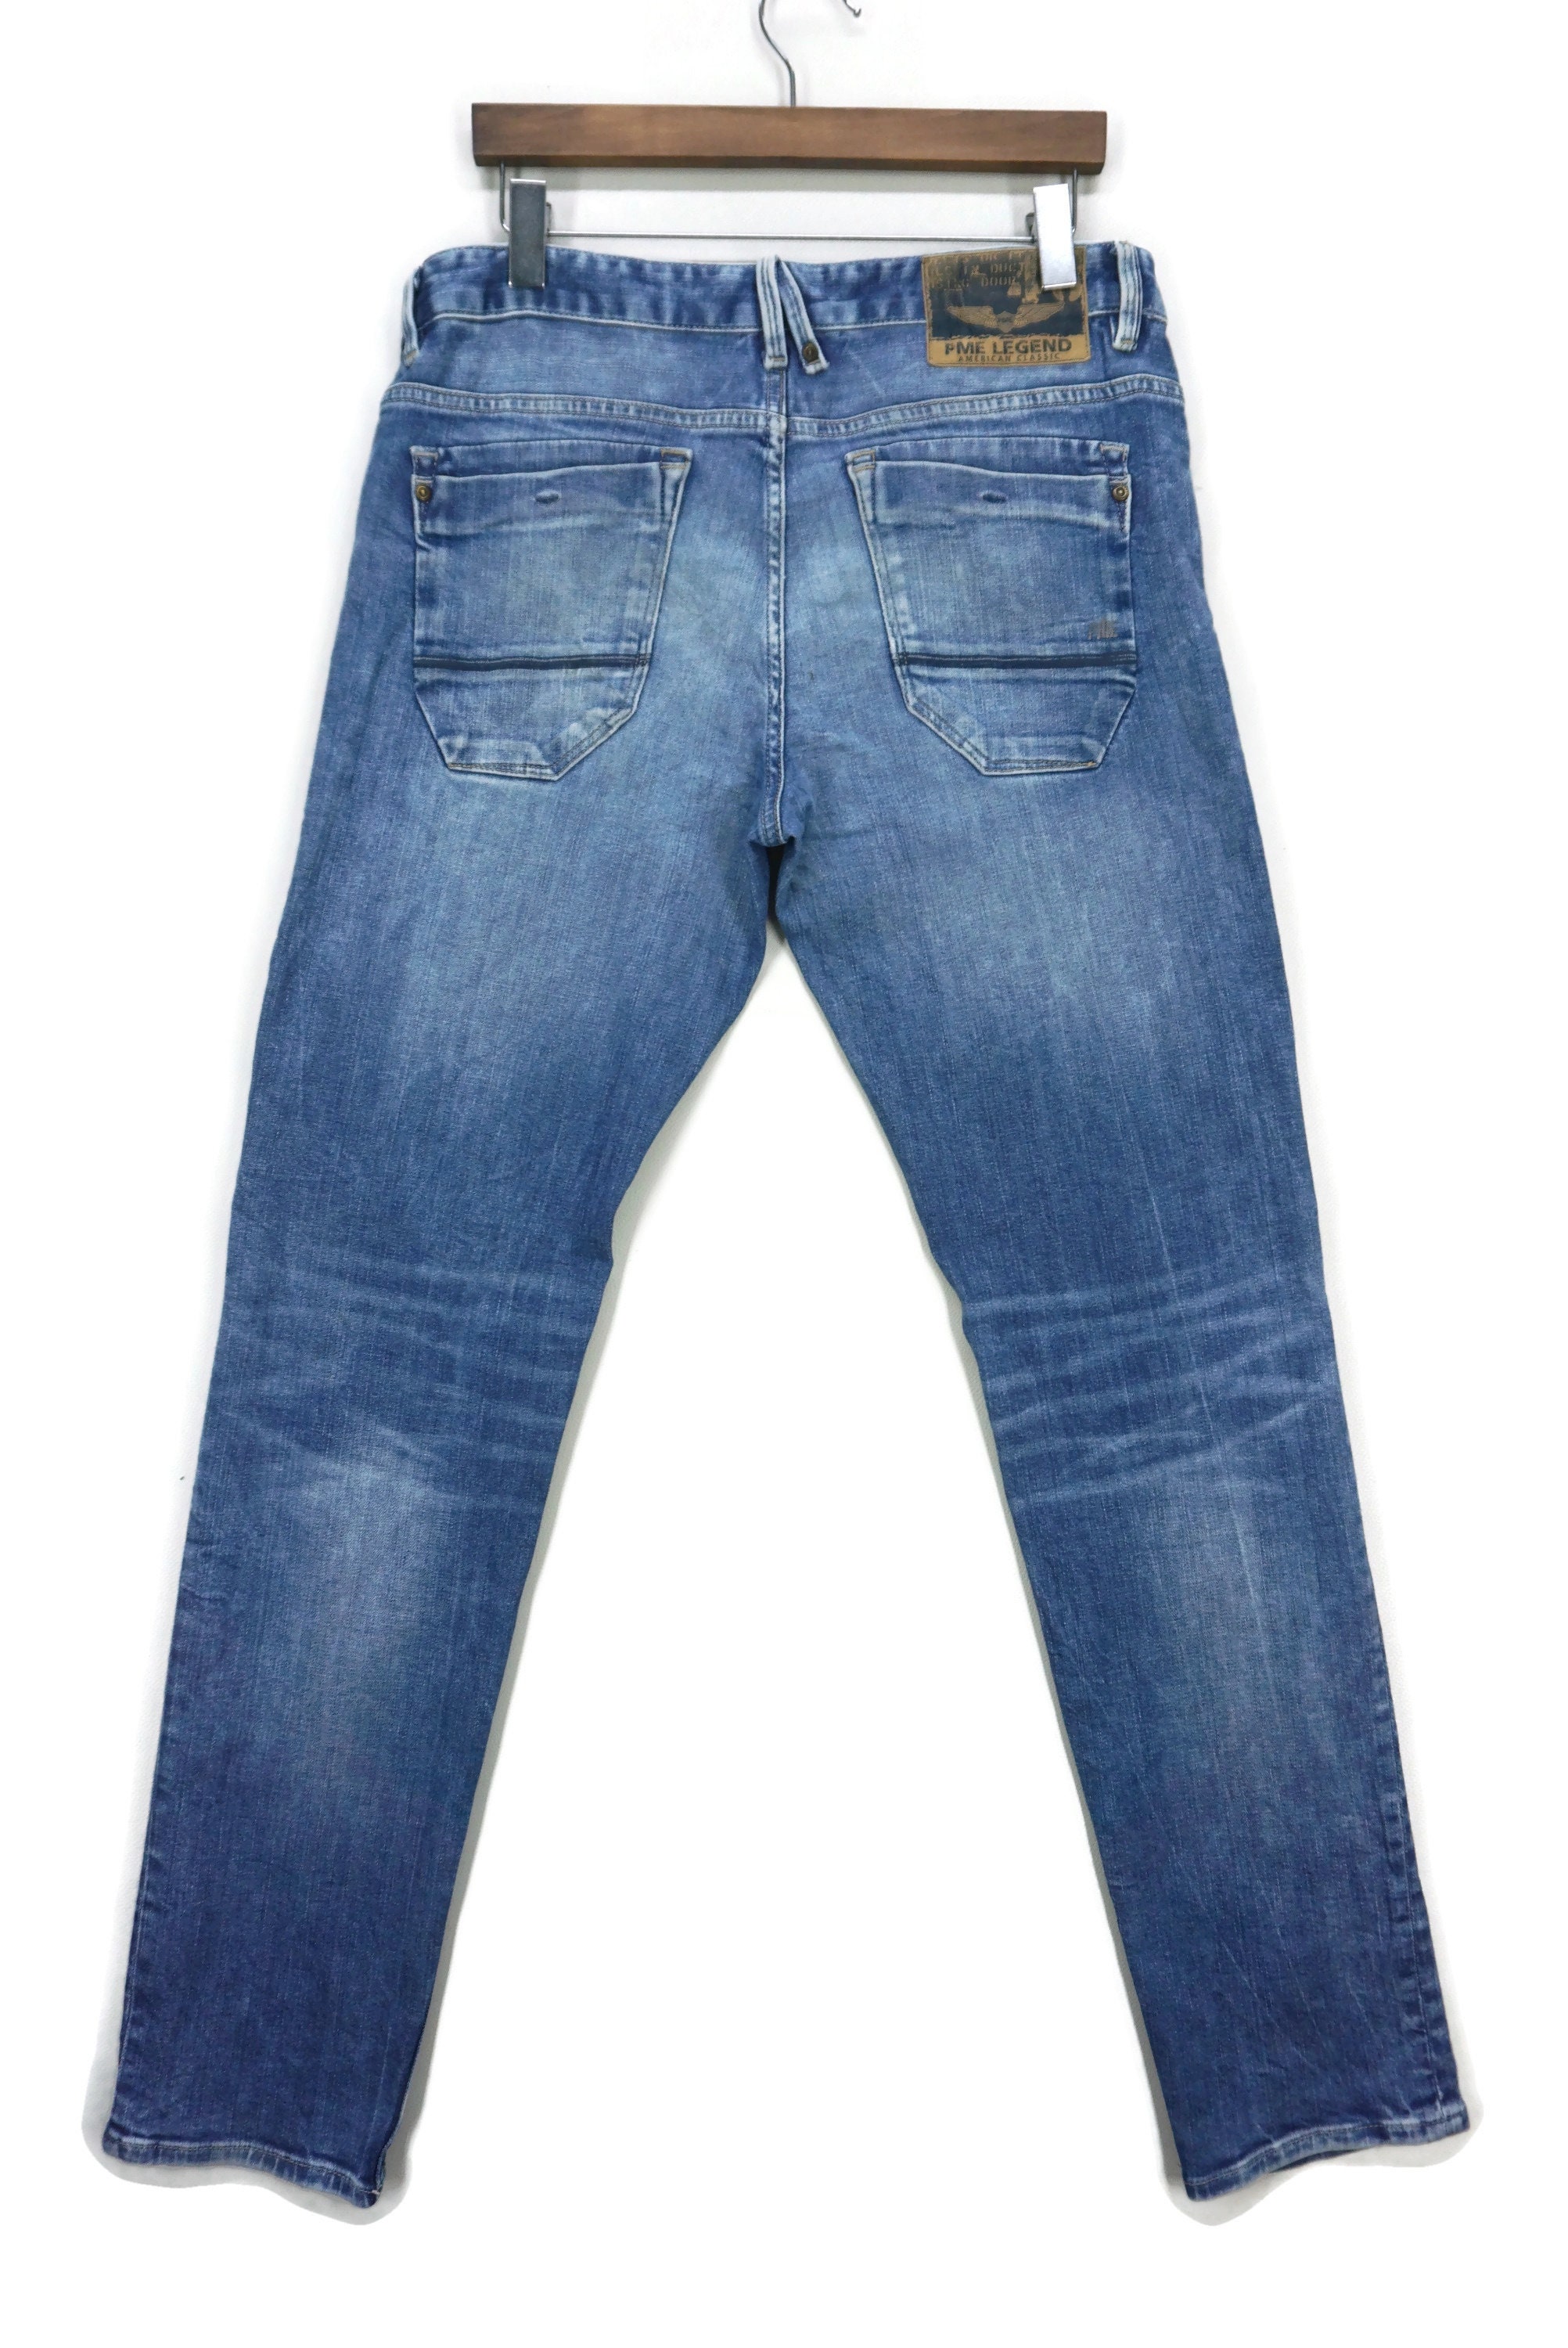 dichtbij Injectie Memo PME Legend Jeans Size 33 W36xl34.5 PME Sky Master Regular Fit - Etsy